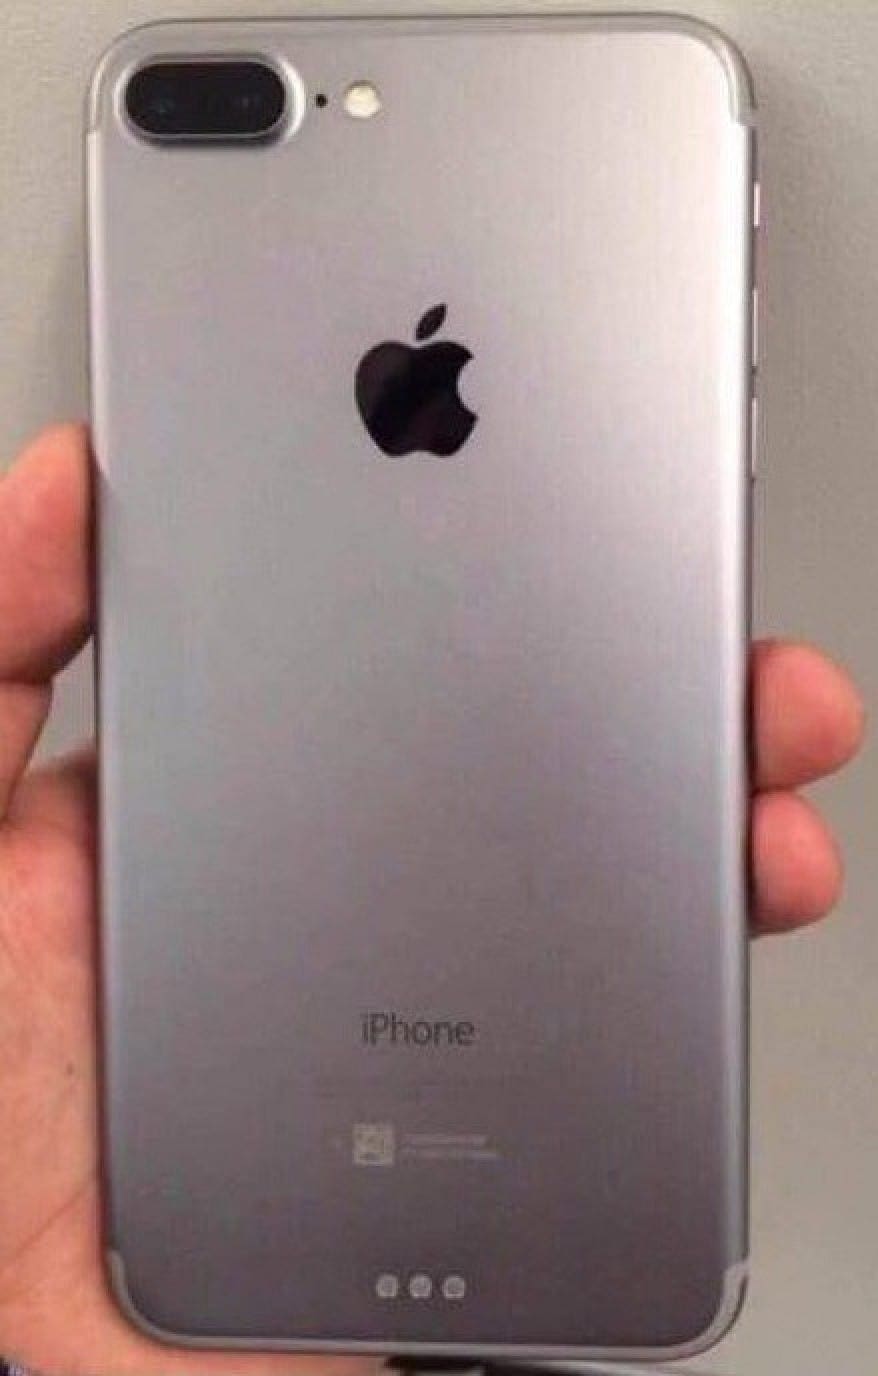 9 iPhone 7 Rumors: True or False? - AppleToolBox